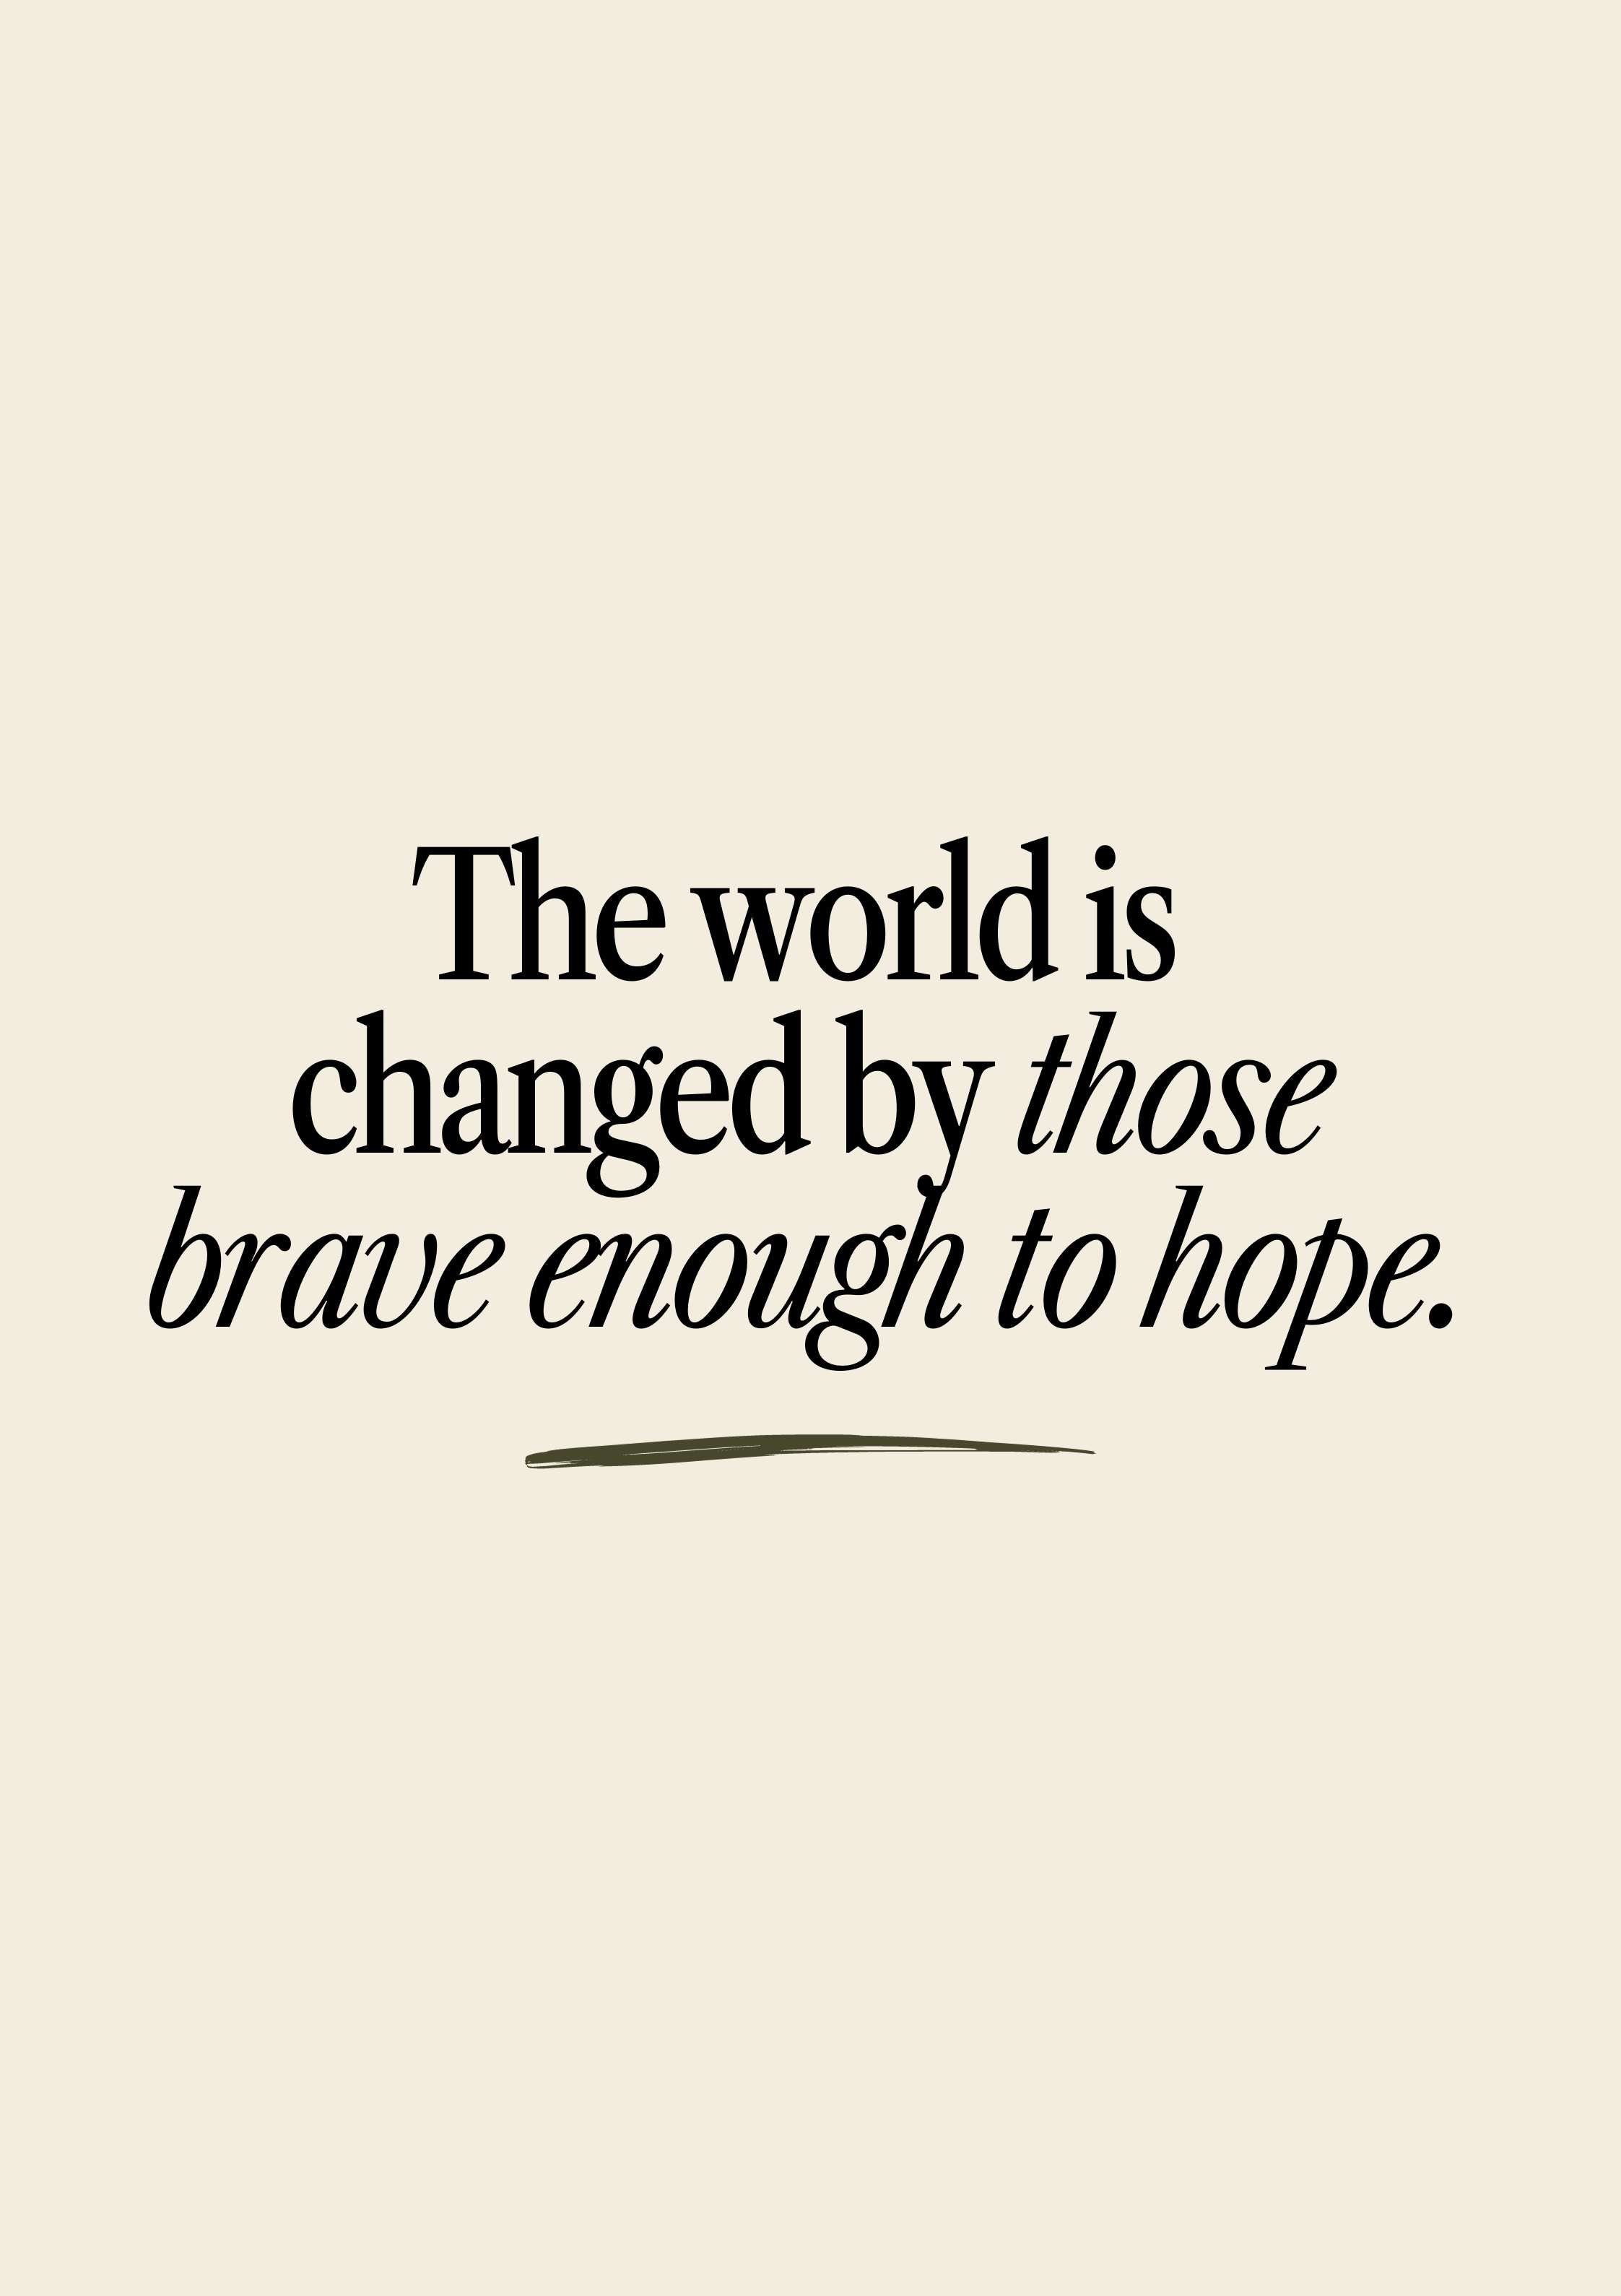 Brave to hope (Digital Art Print)